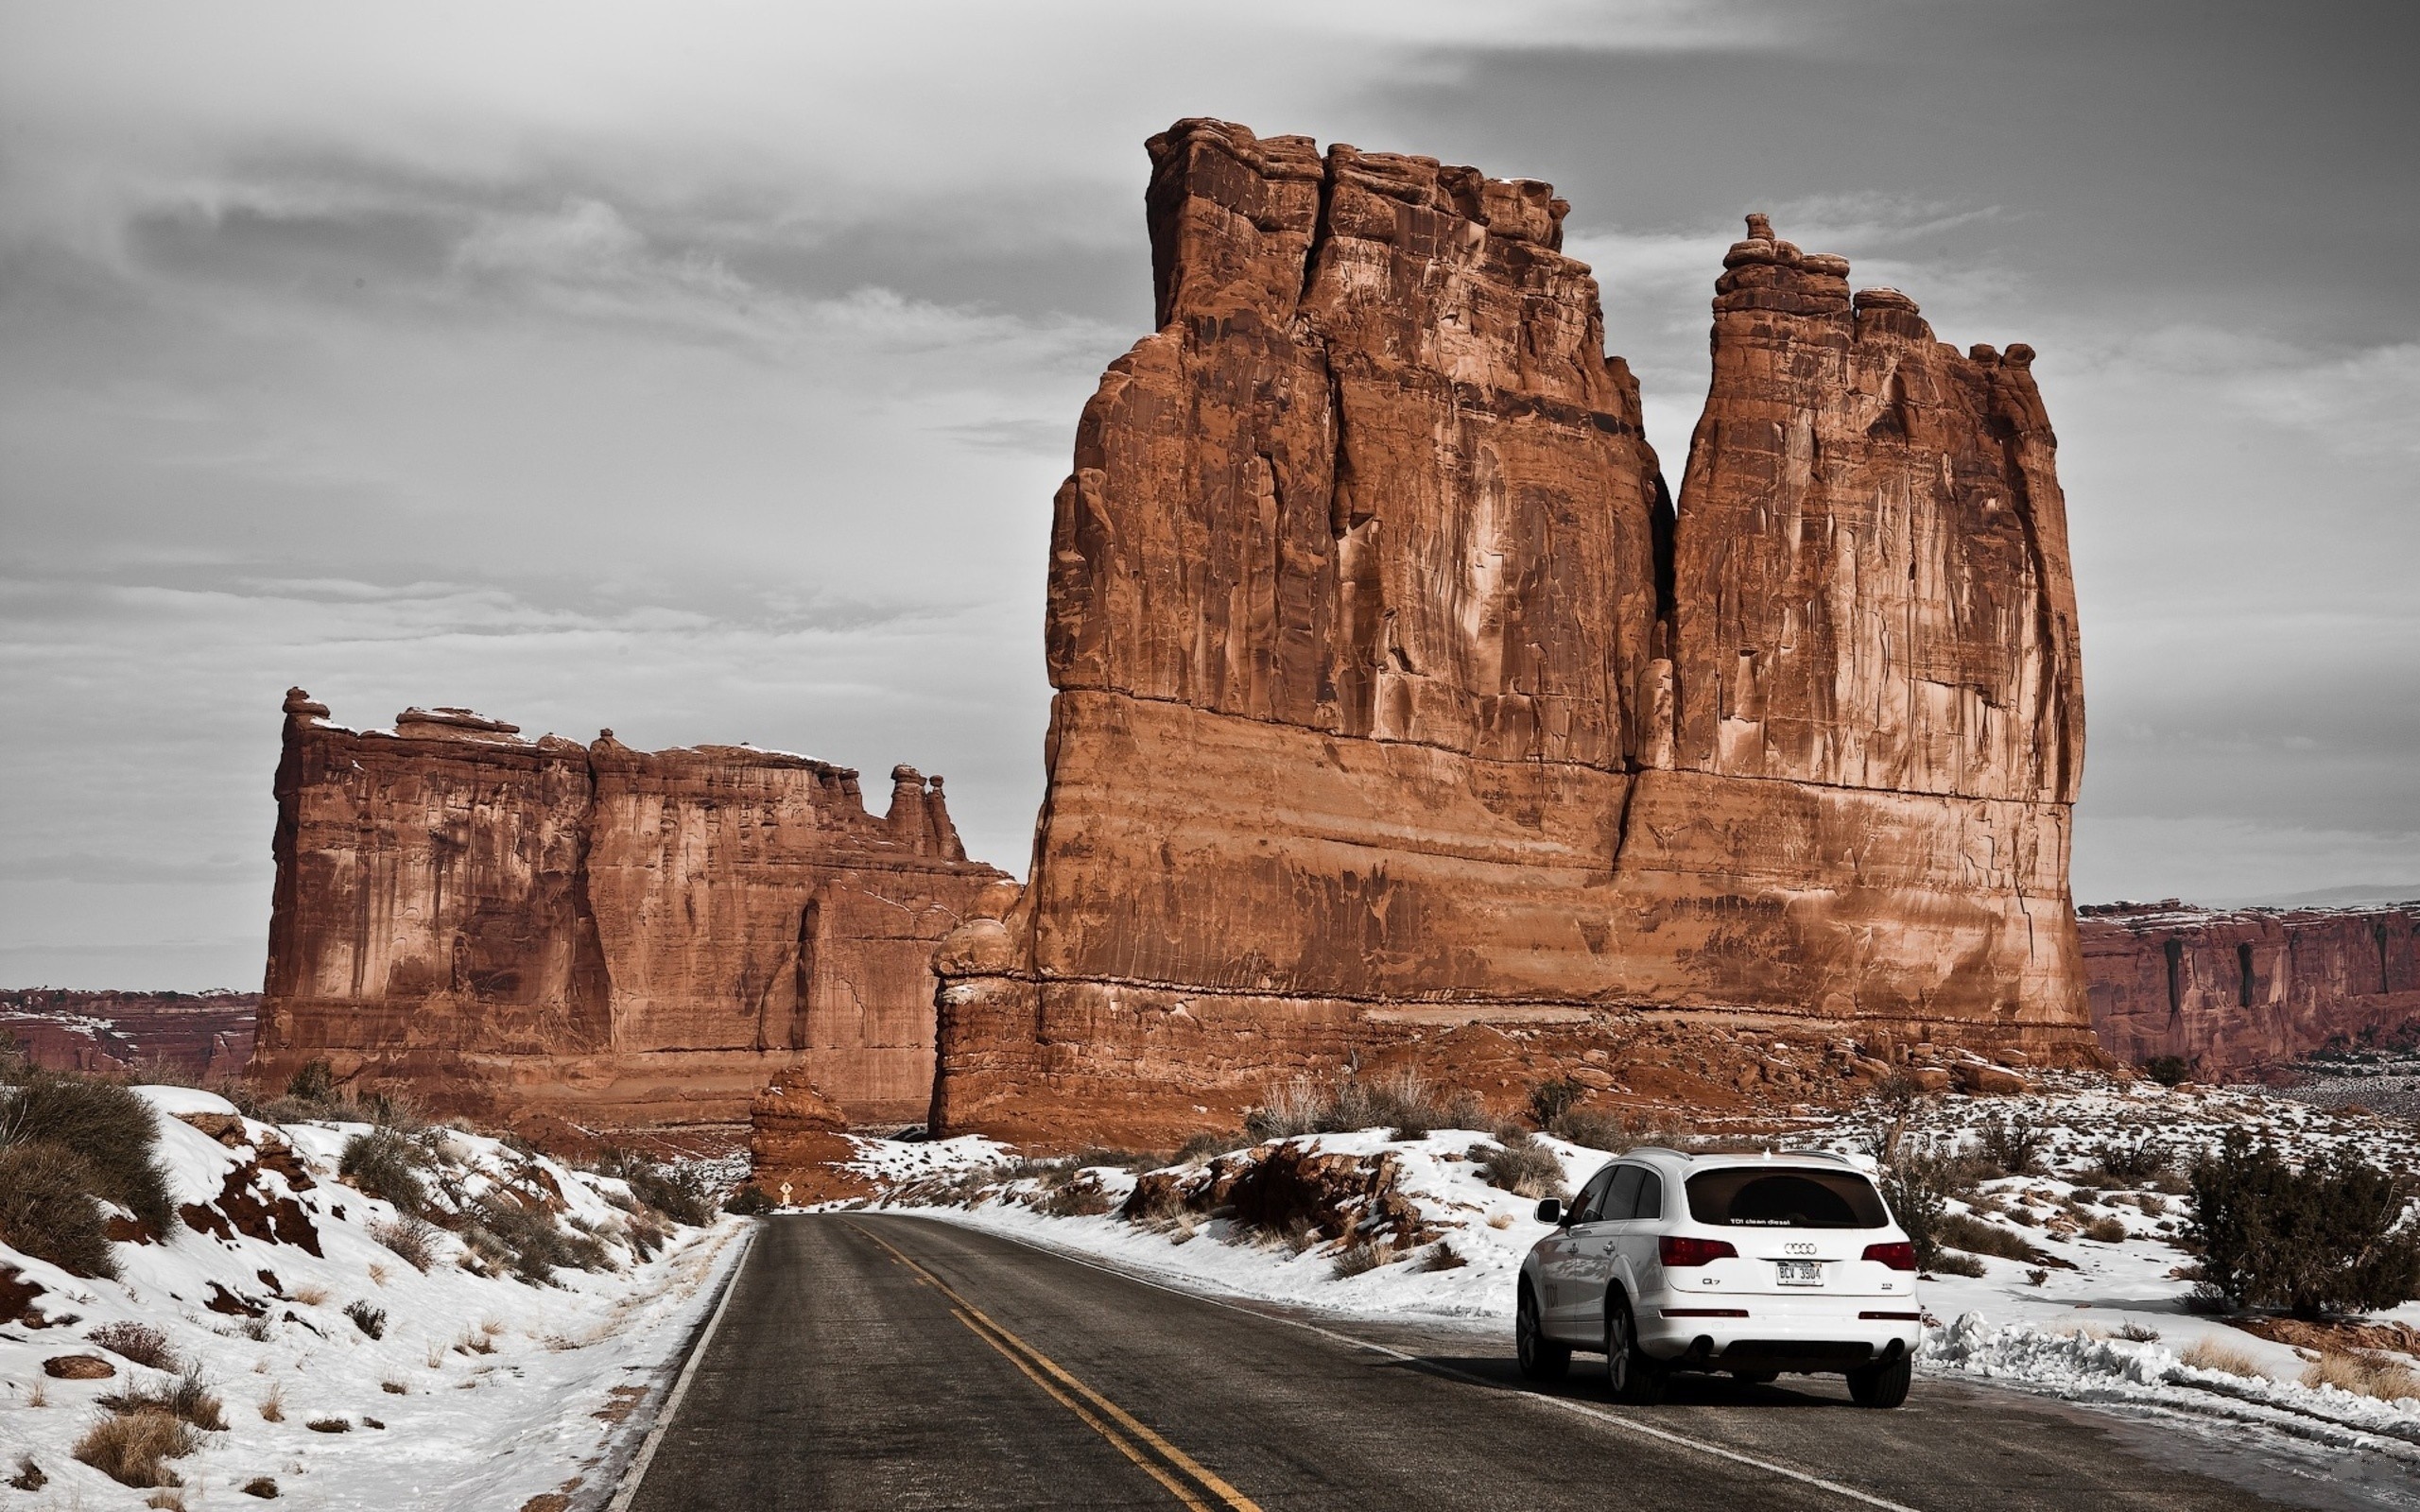 General 2560x1600 nature landscape Audi road car snow desert rocks overcast white cars vehicle rock formation